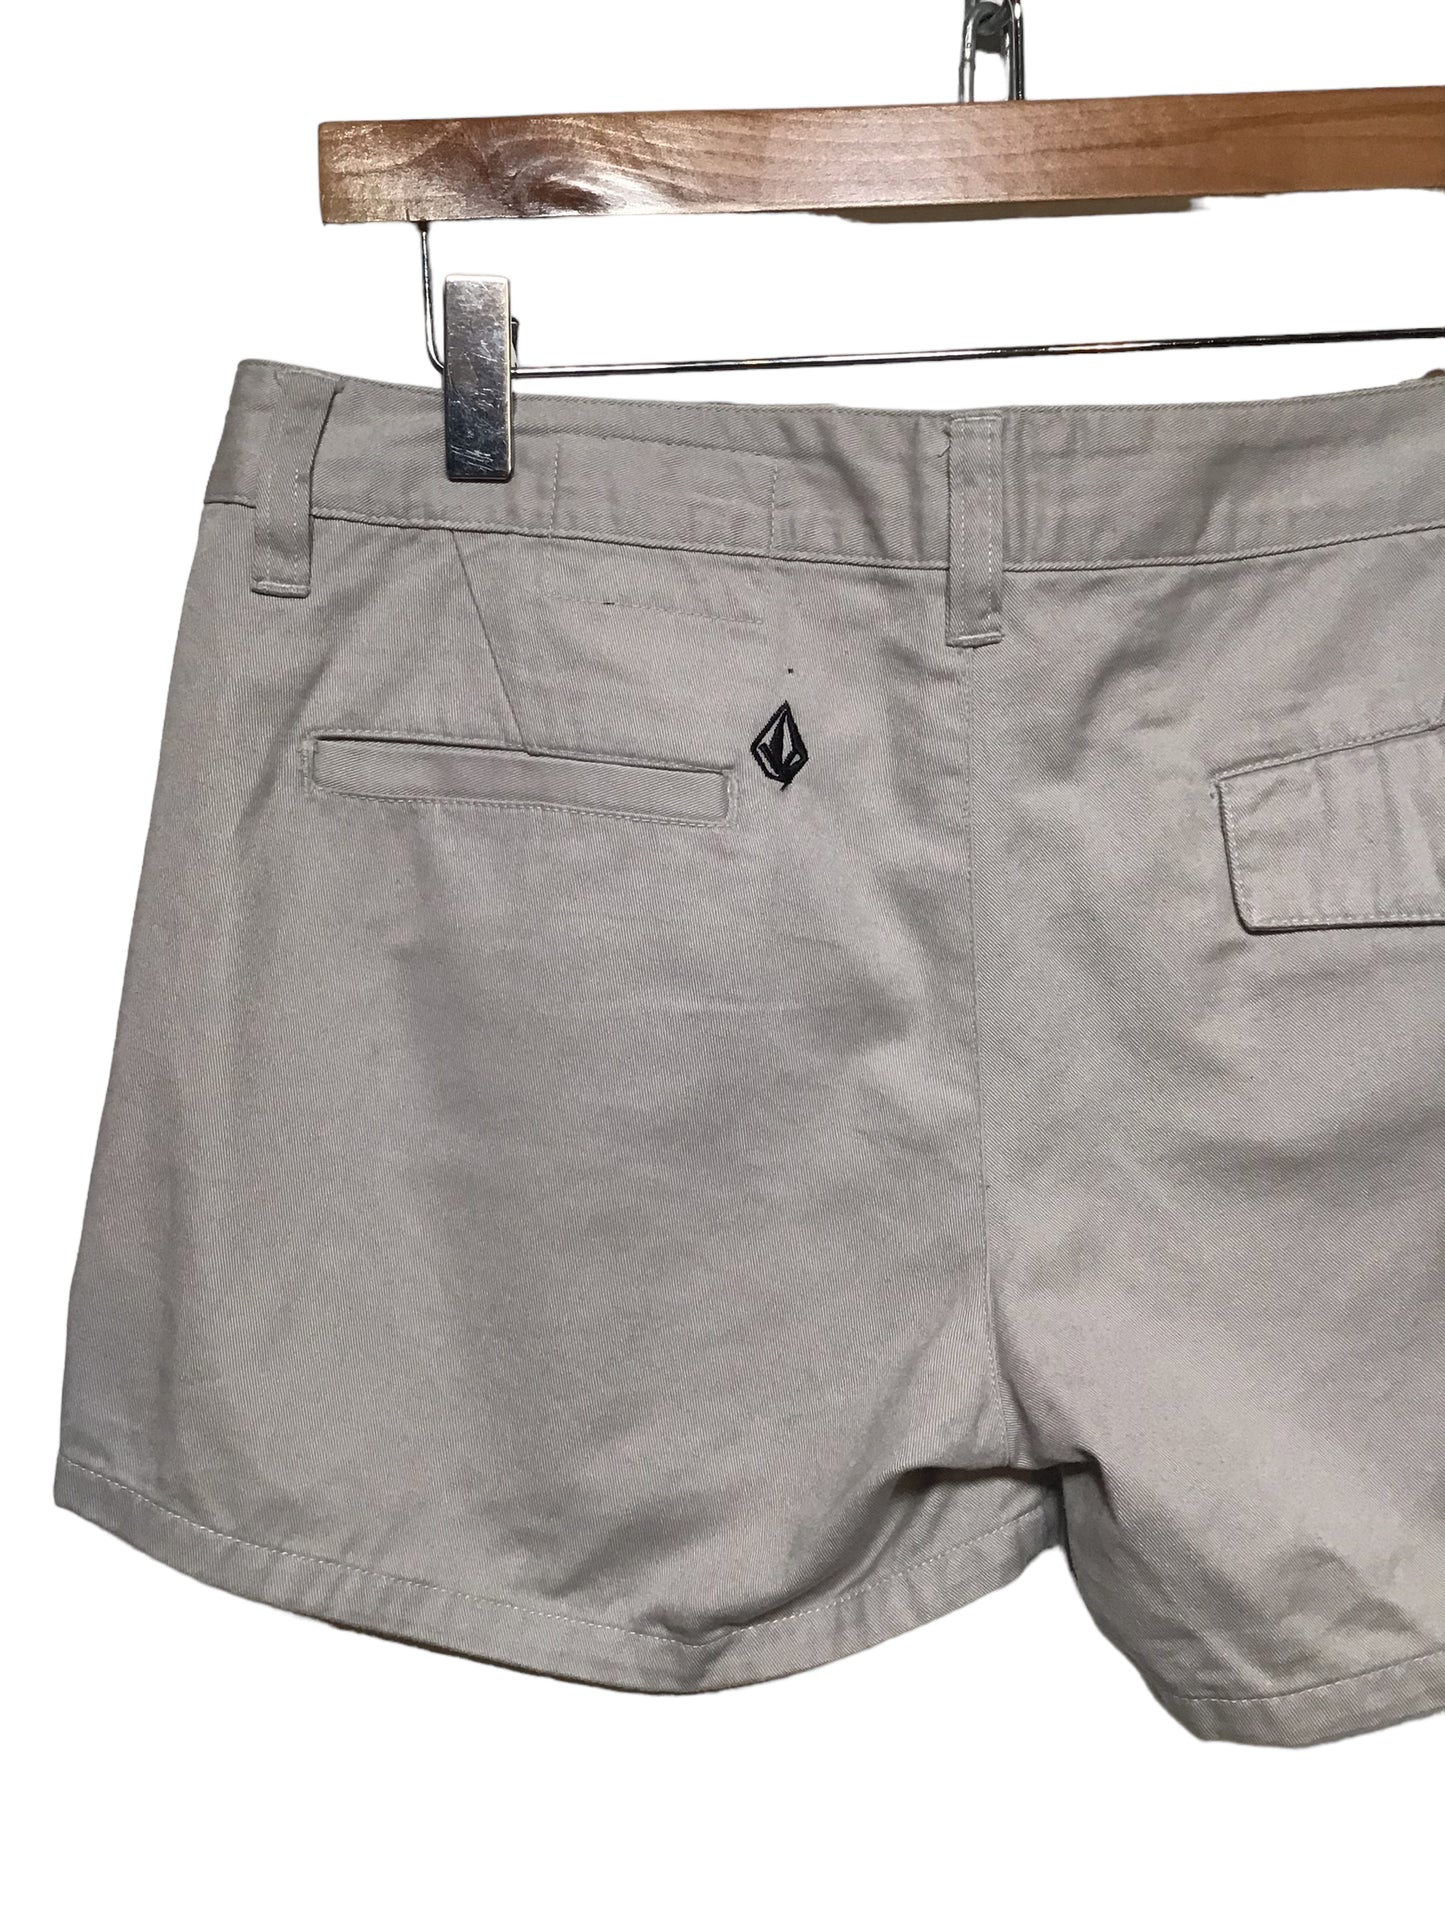 Volcom Stone Shorts (Size L)